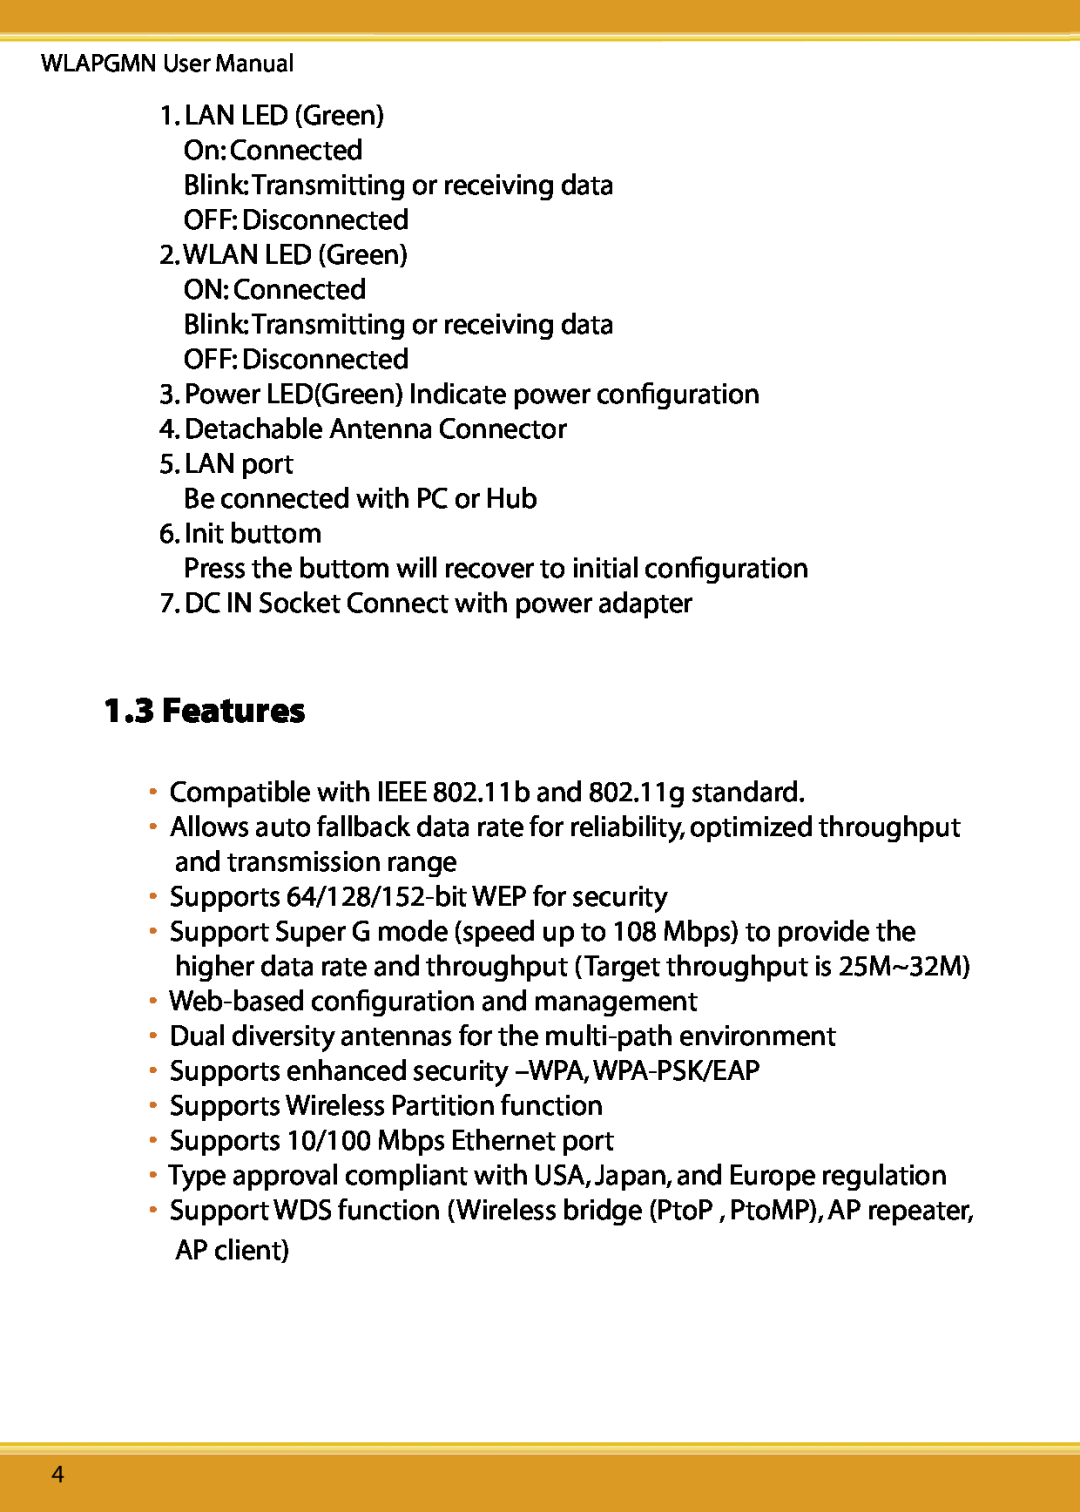 Corega CG-WLAPGMN user manual Features, WLAPGMN User Manual 1. LAN LED Green On Connected, WLAN LED Green ON Connected 